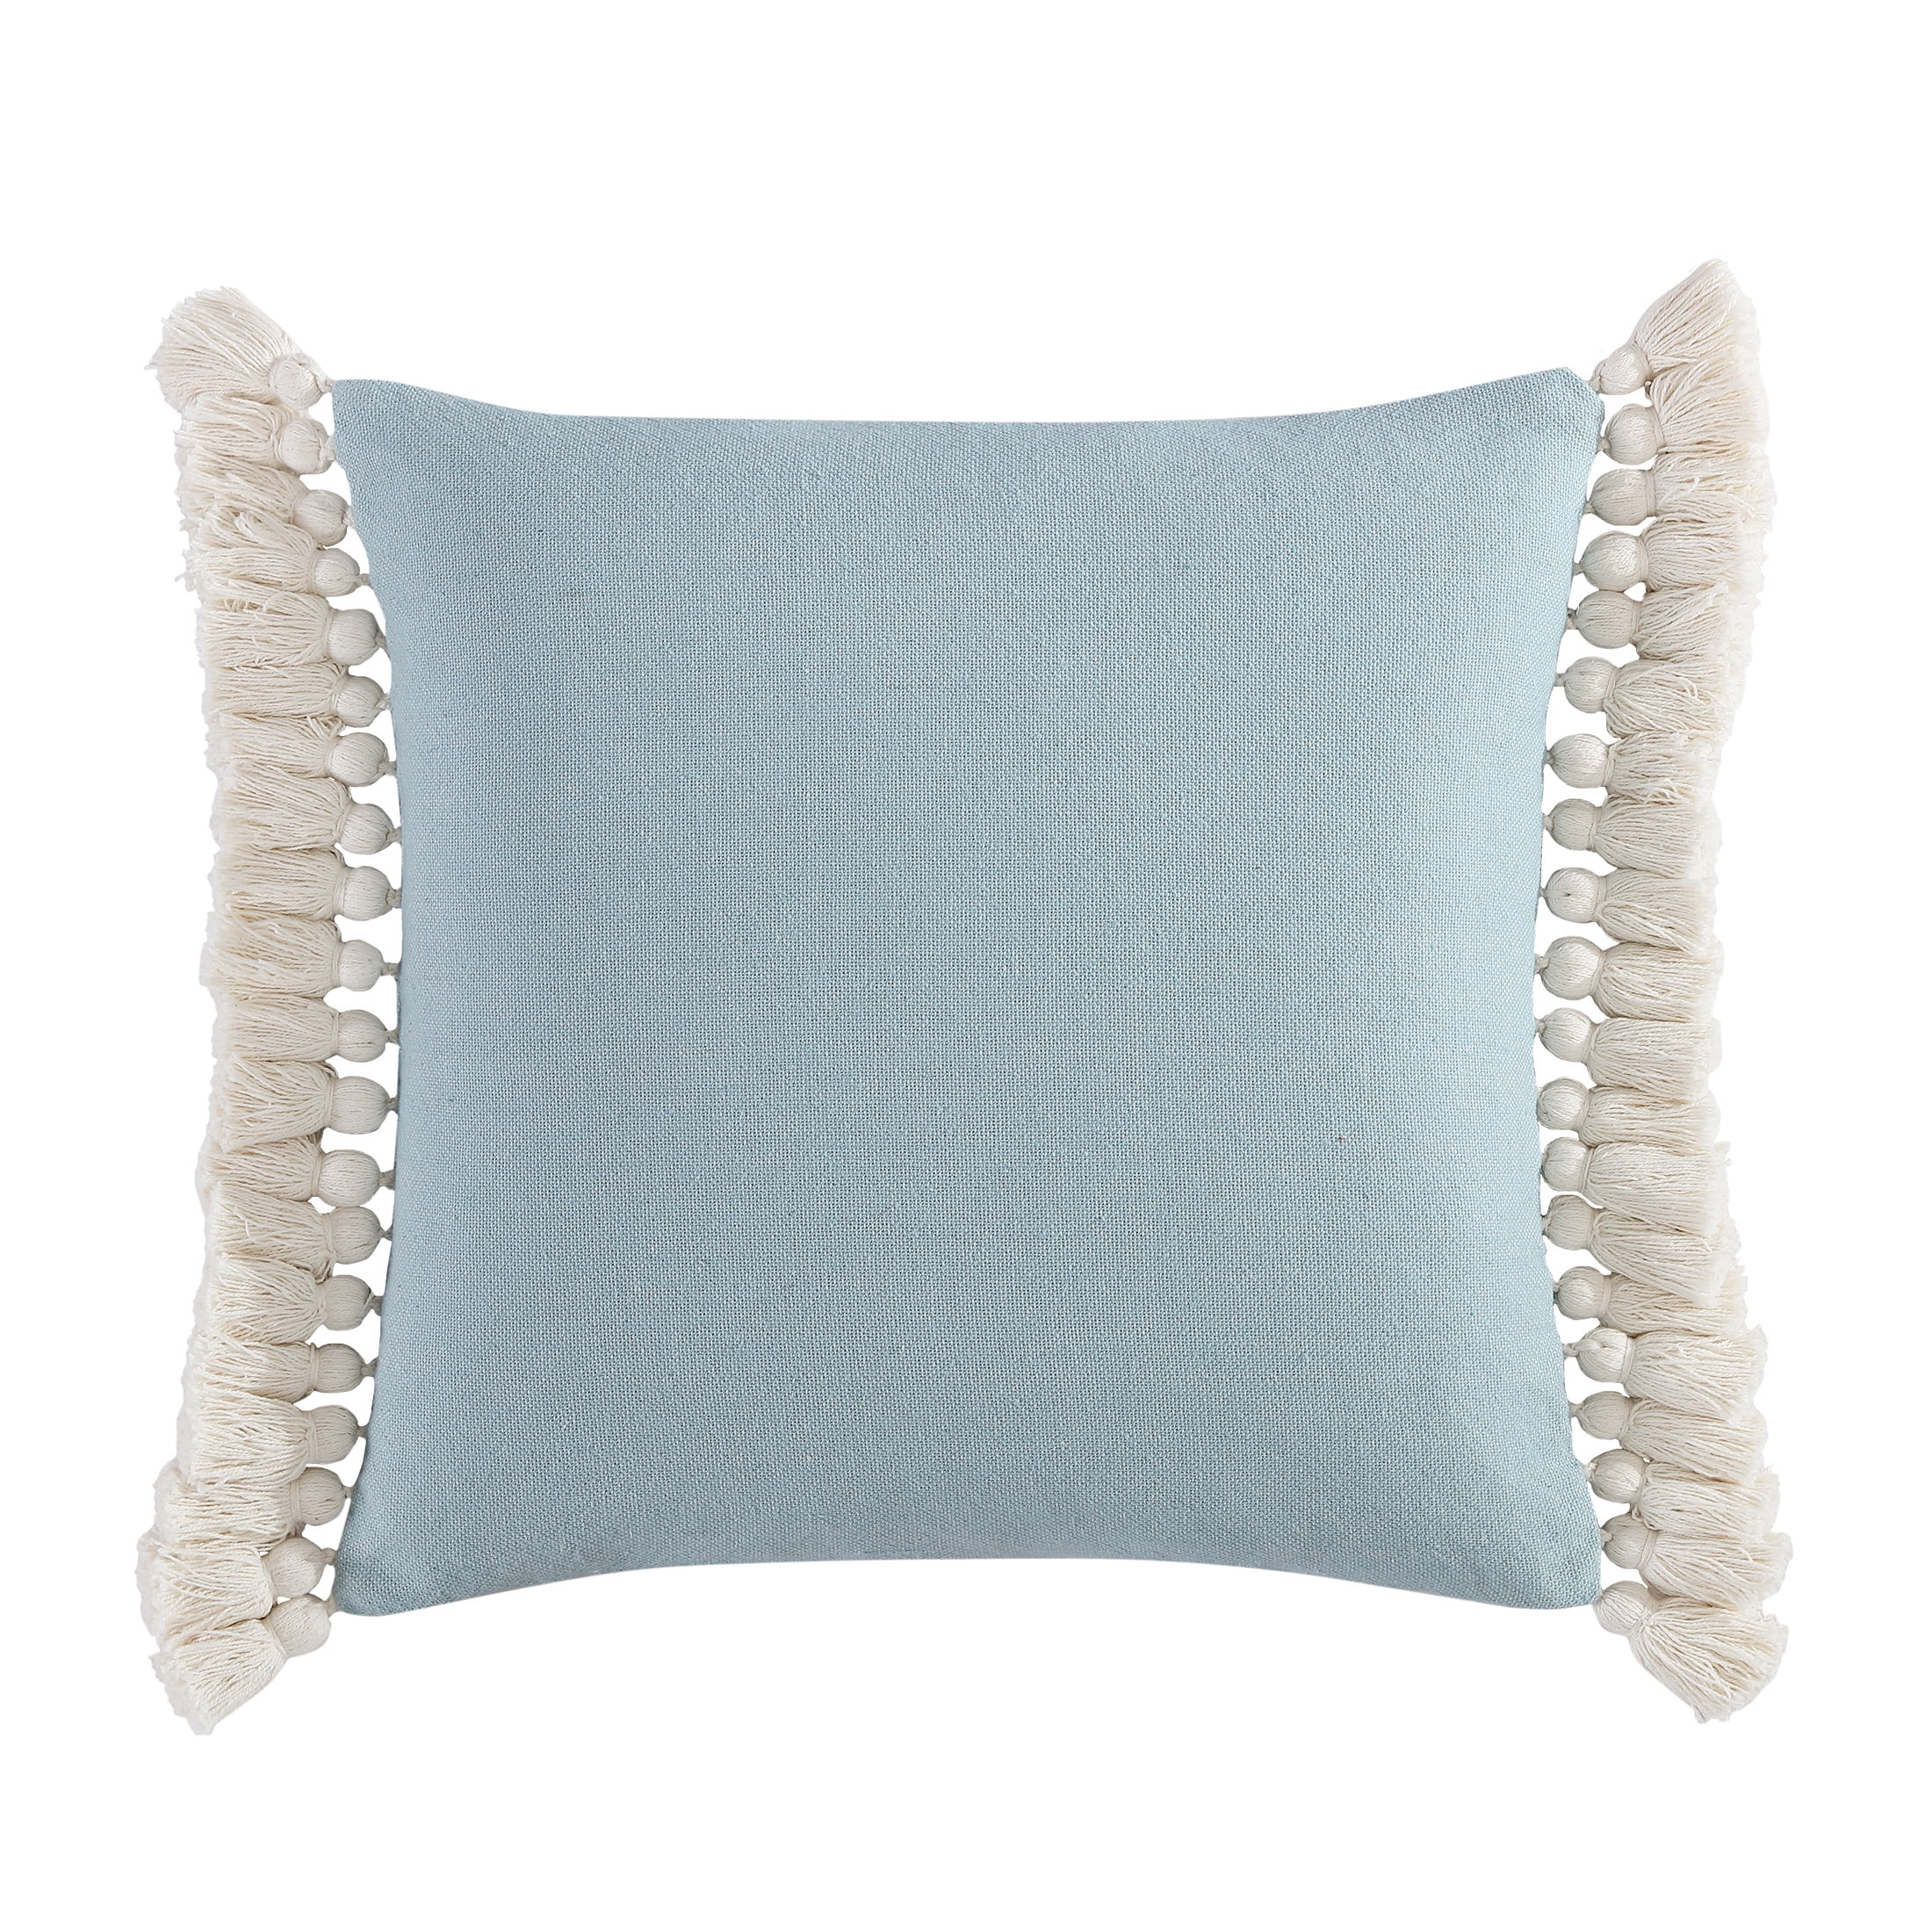 Sky Summer Sweet Blue Green Cotton Reversible 2 Euro Pillow Shams NWT $110 